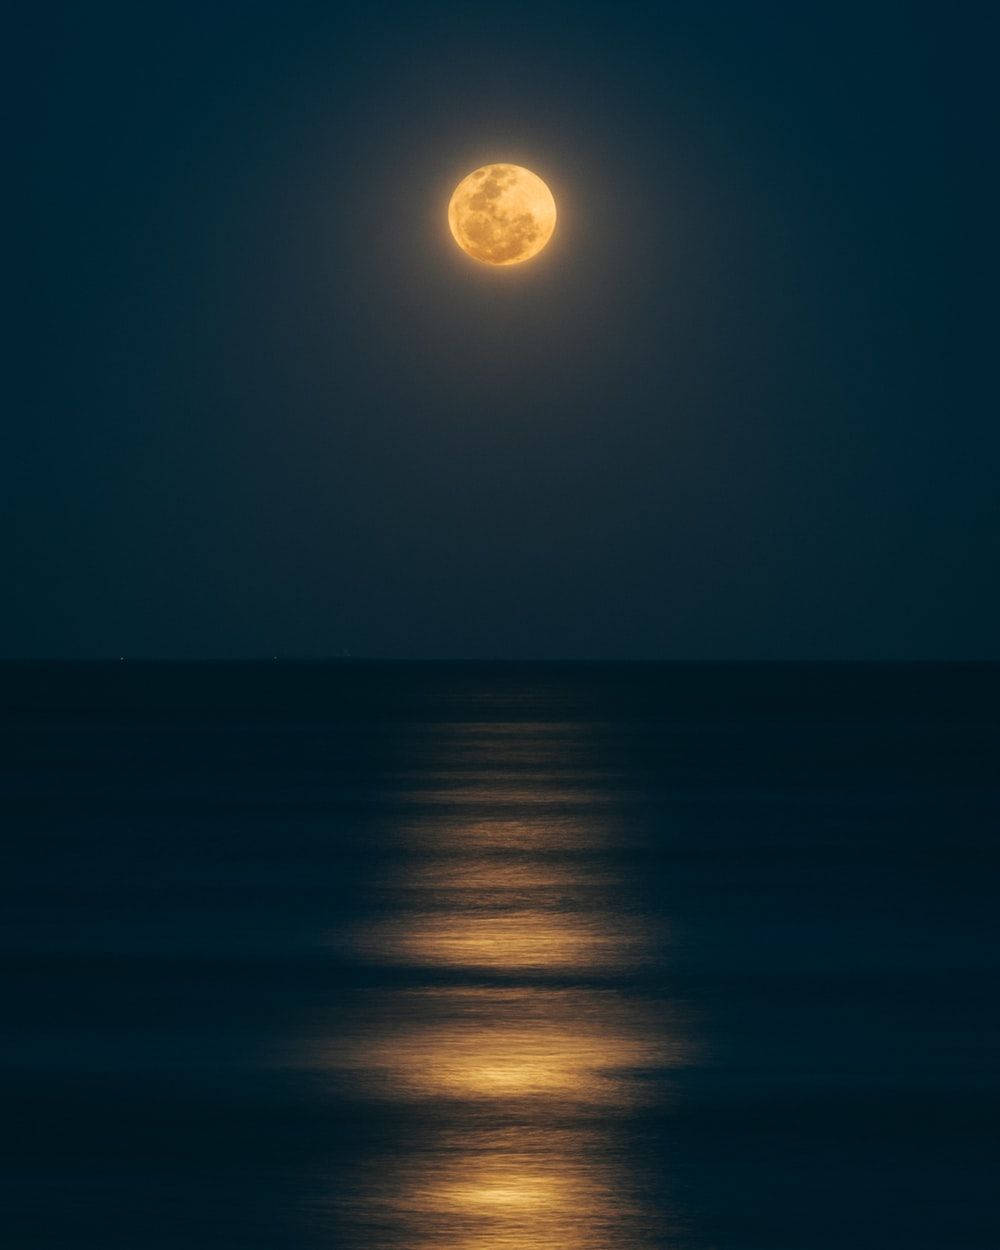 Dark Night And Tranquil Full Moon